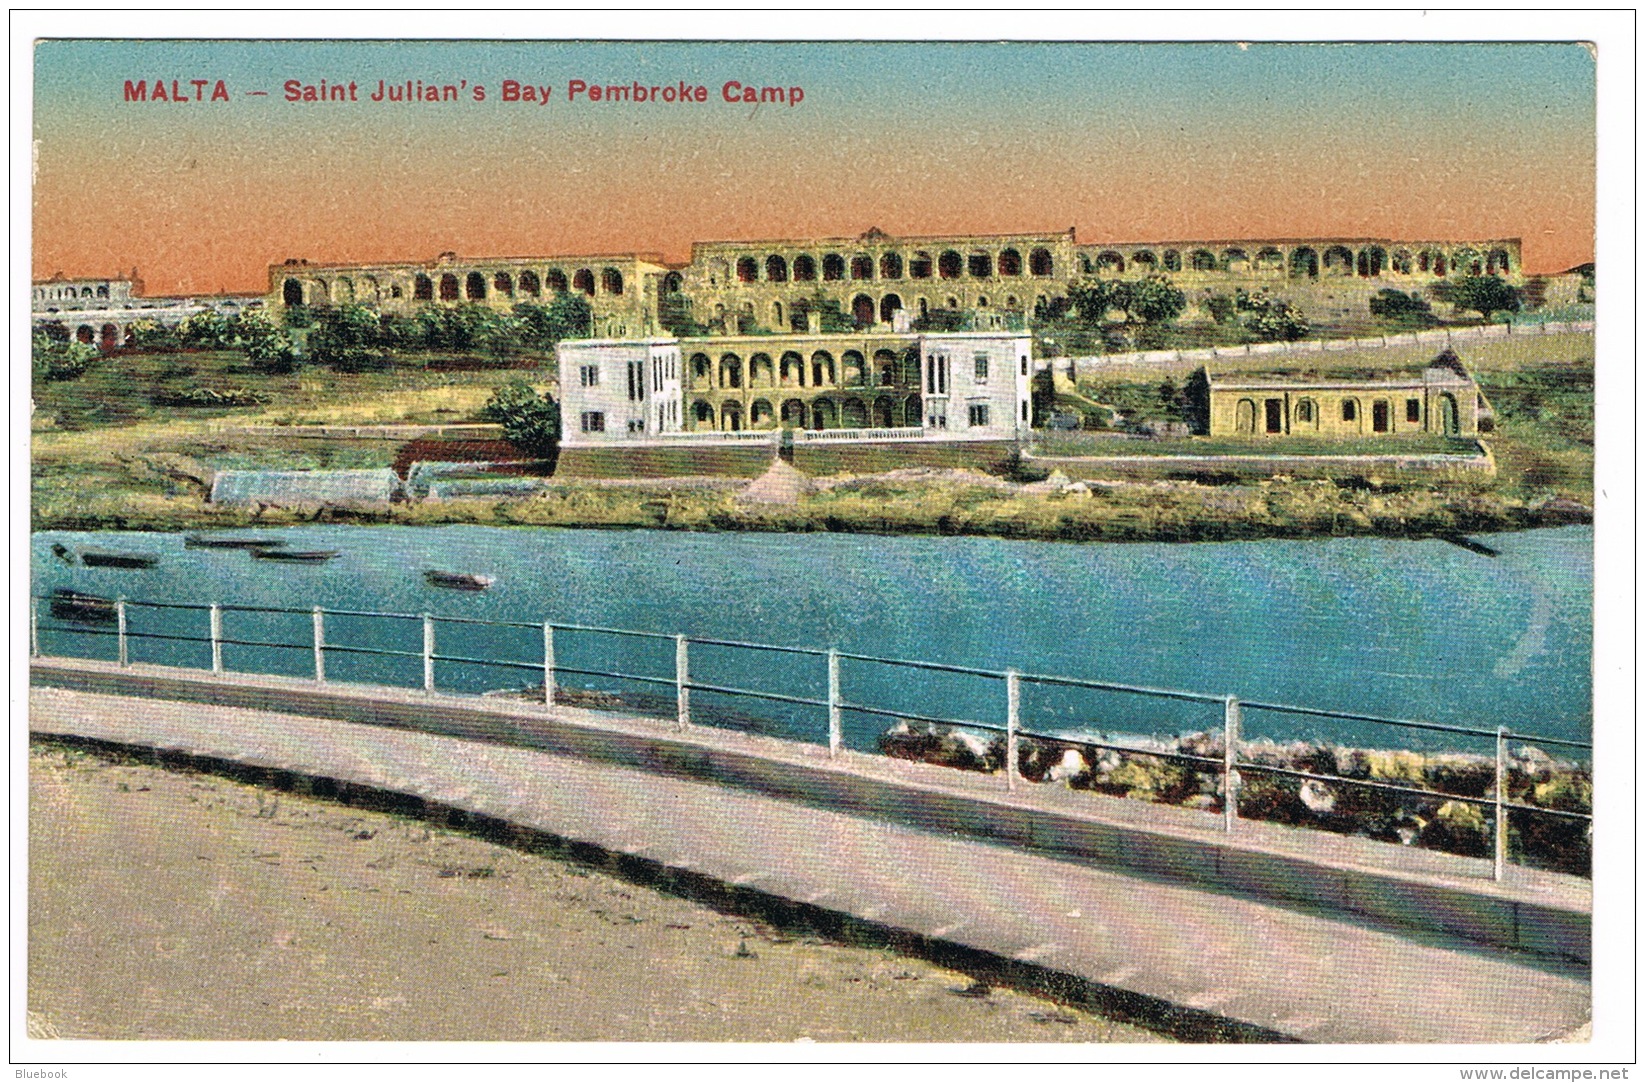 RB 1131 - Early Malta Postcard - Saint Julian's Bay &amp; Pembroke Camp - Malta